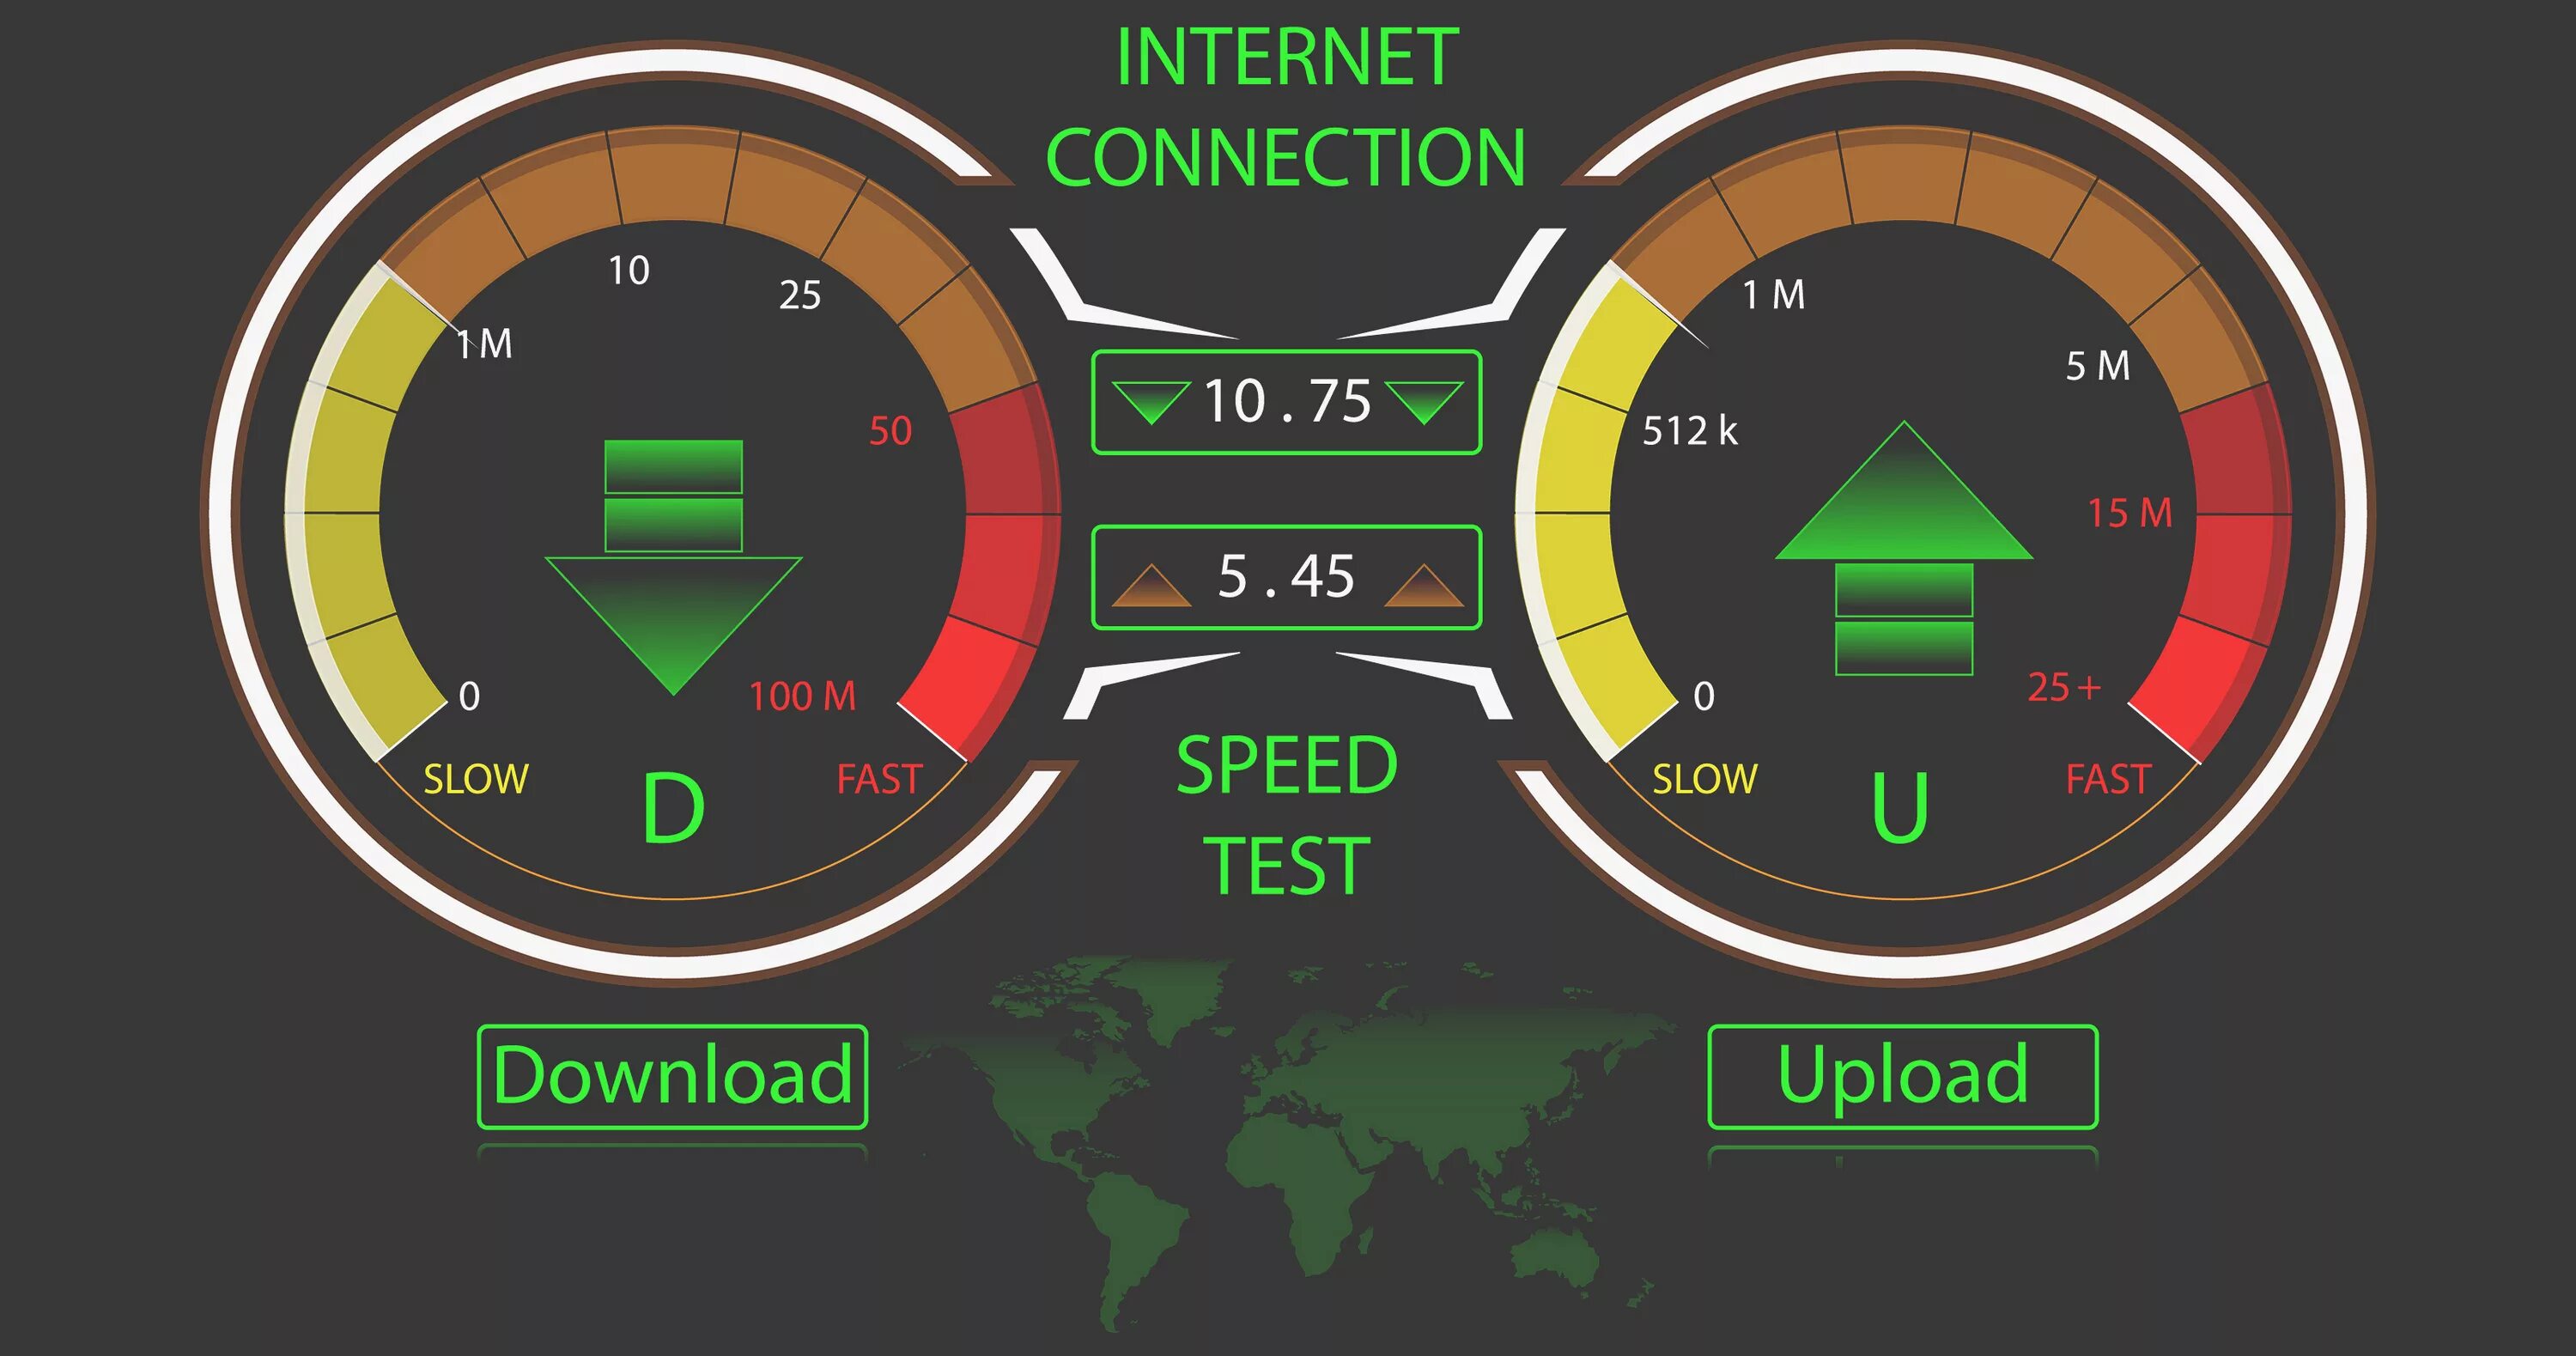 Speed best. Download Speed. Fast Speed Internet. Download and upload Speed. Slow скорость.